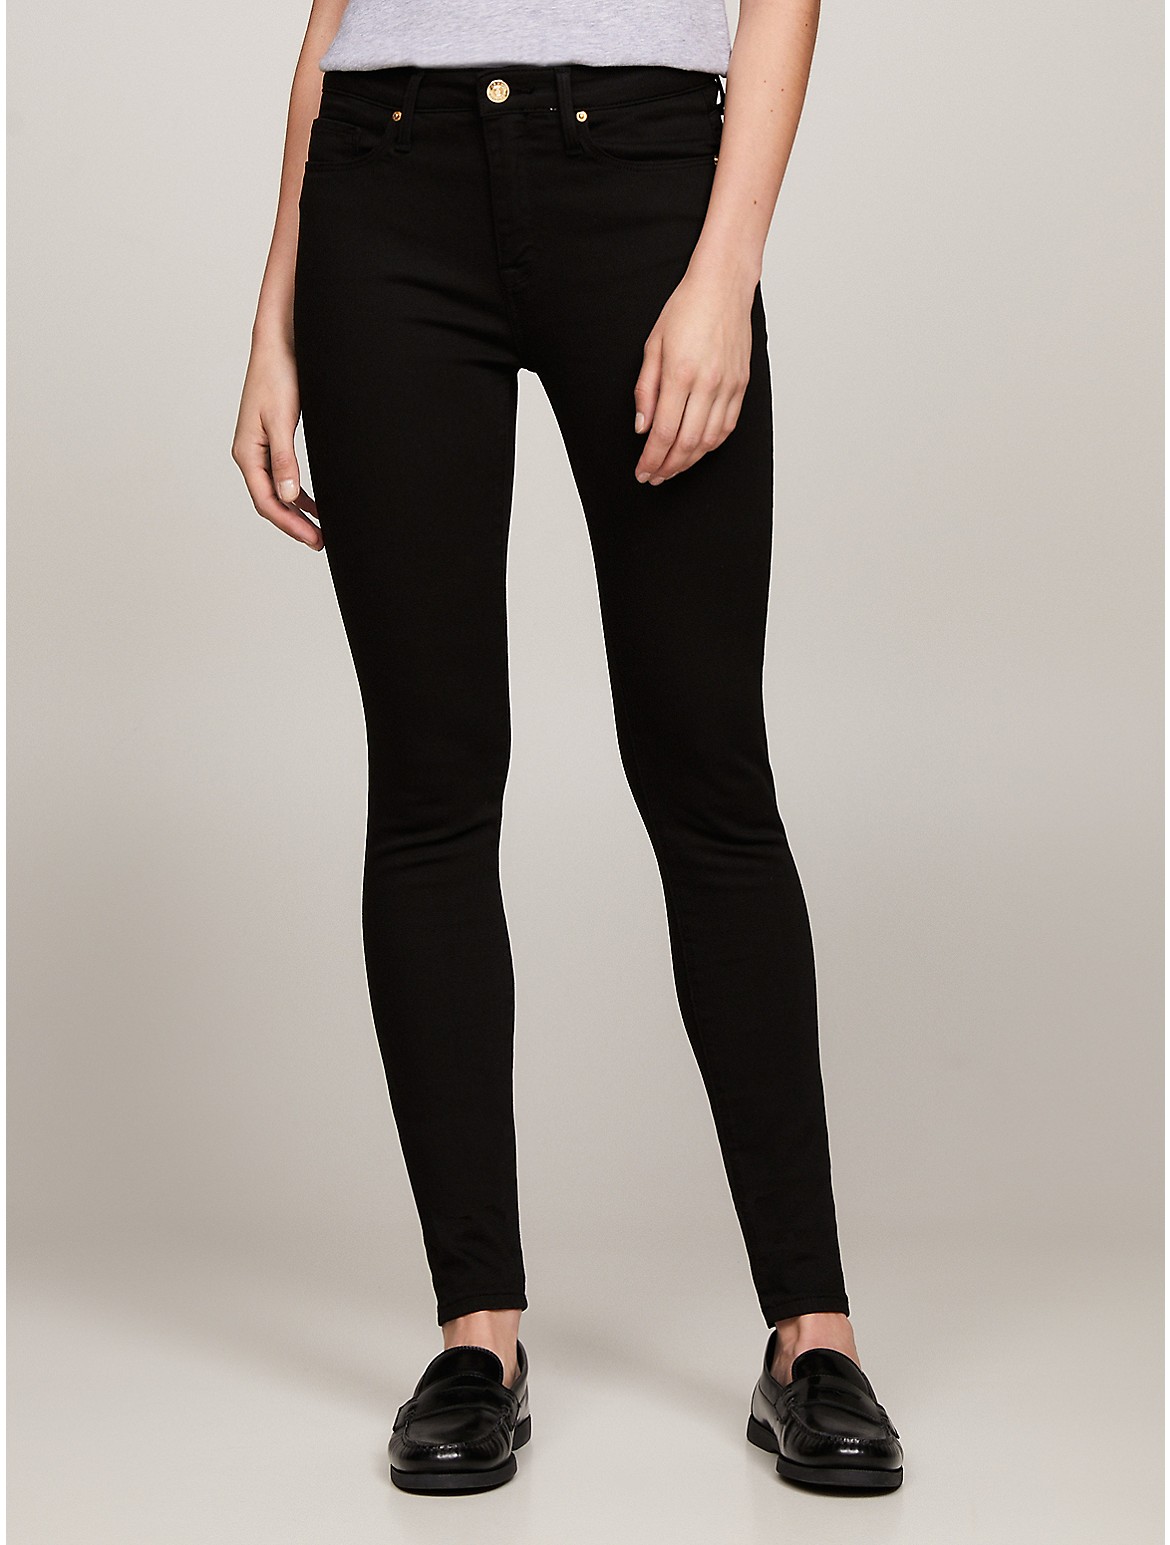 Tommy Hilfiger Women's Super Skinny Fit Black Jean